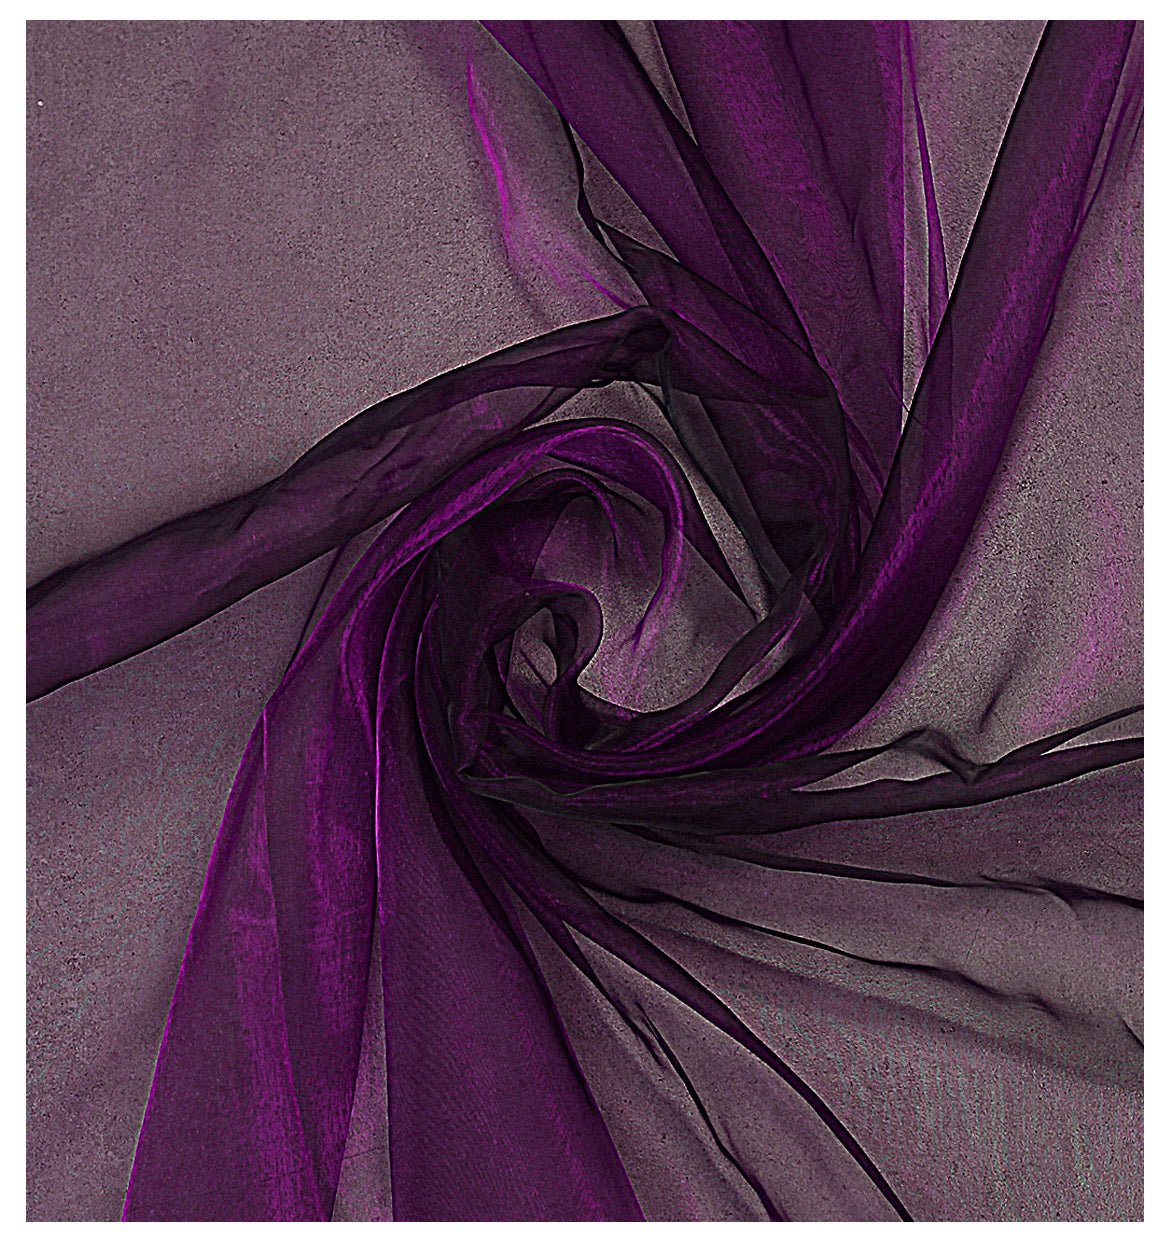 Dark Purple,20110cf8-6d40-443a-af04-1f96dac46a97